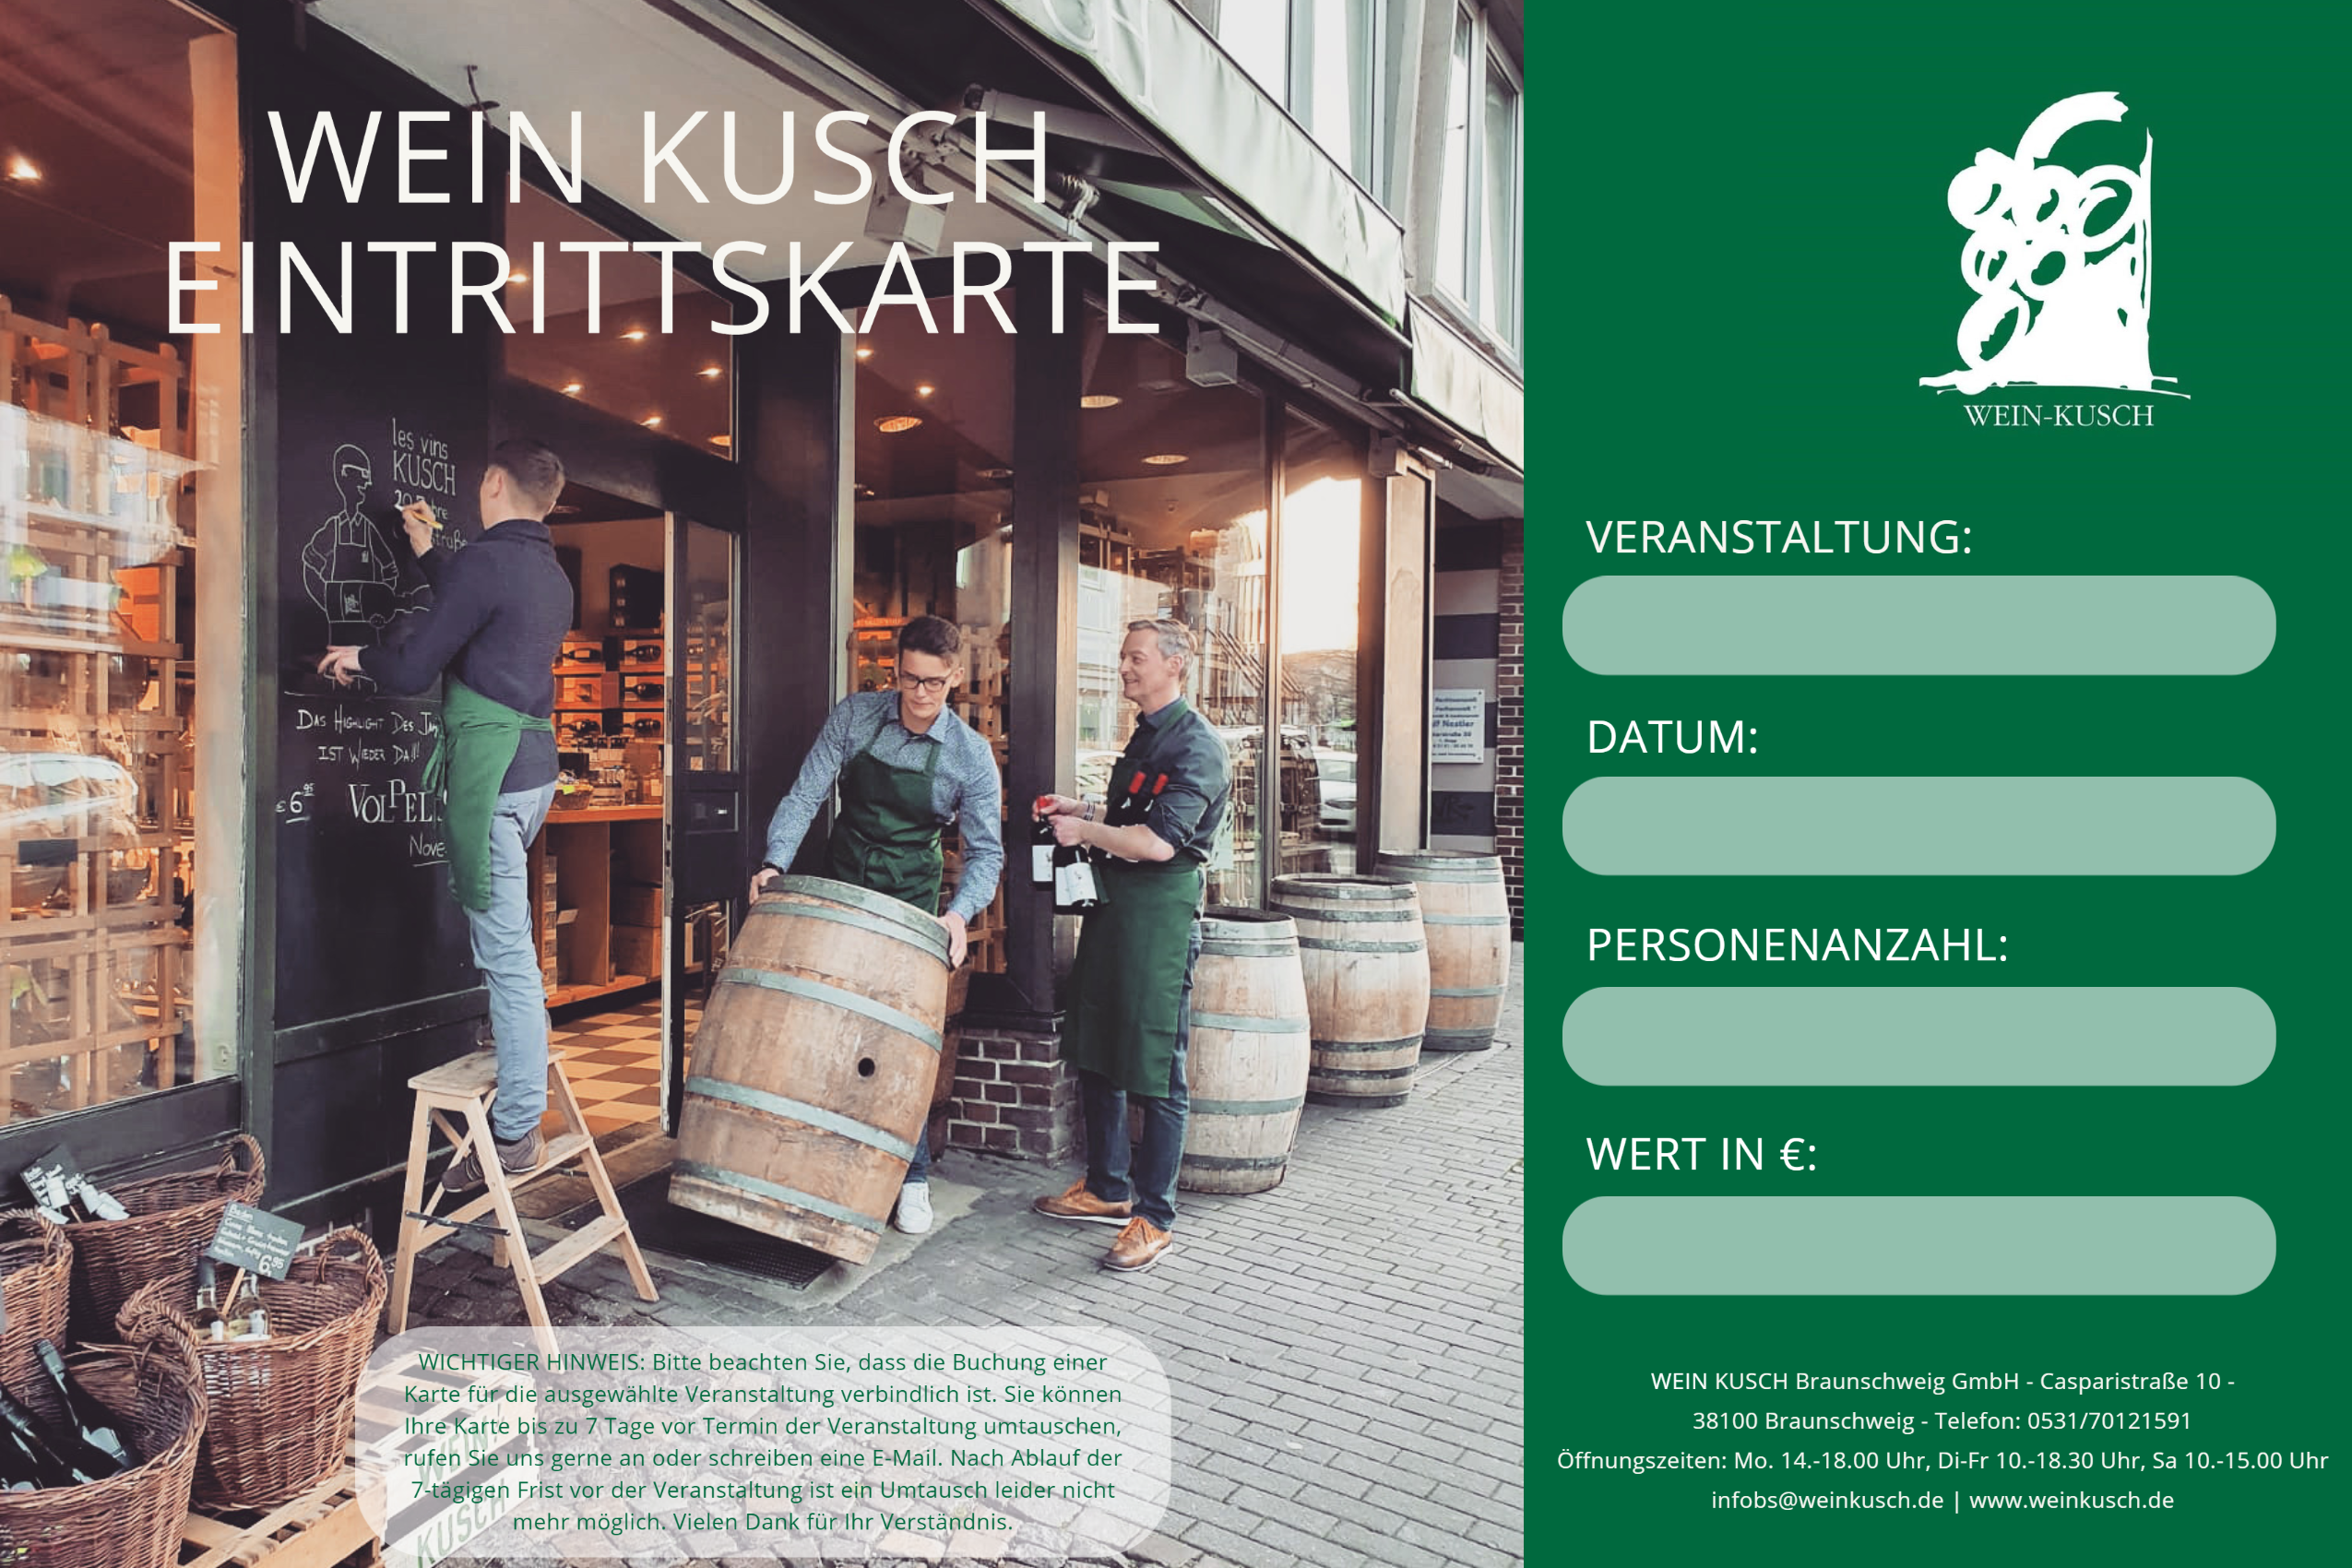 2022.09.22 - Rum Tasting Deluxe – Limited Editions in Braunschweig 19.00 Uhr